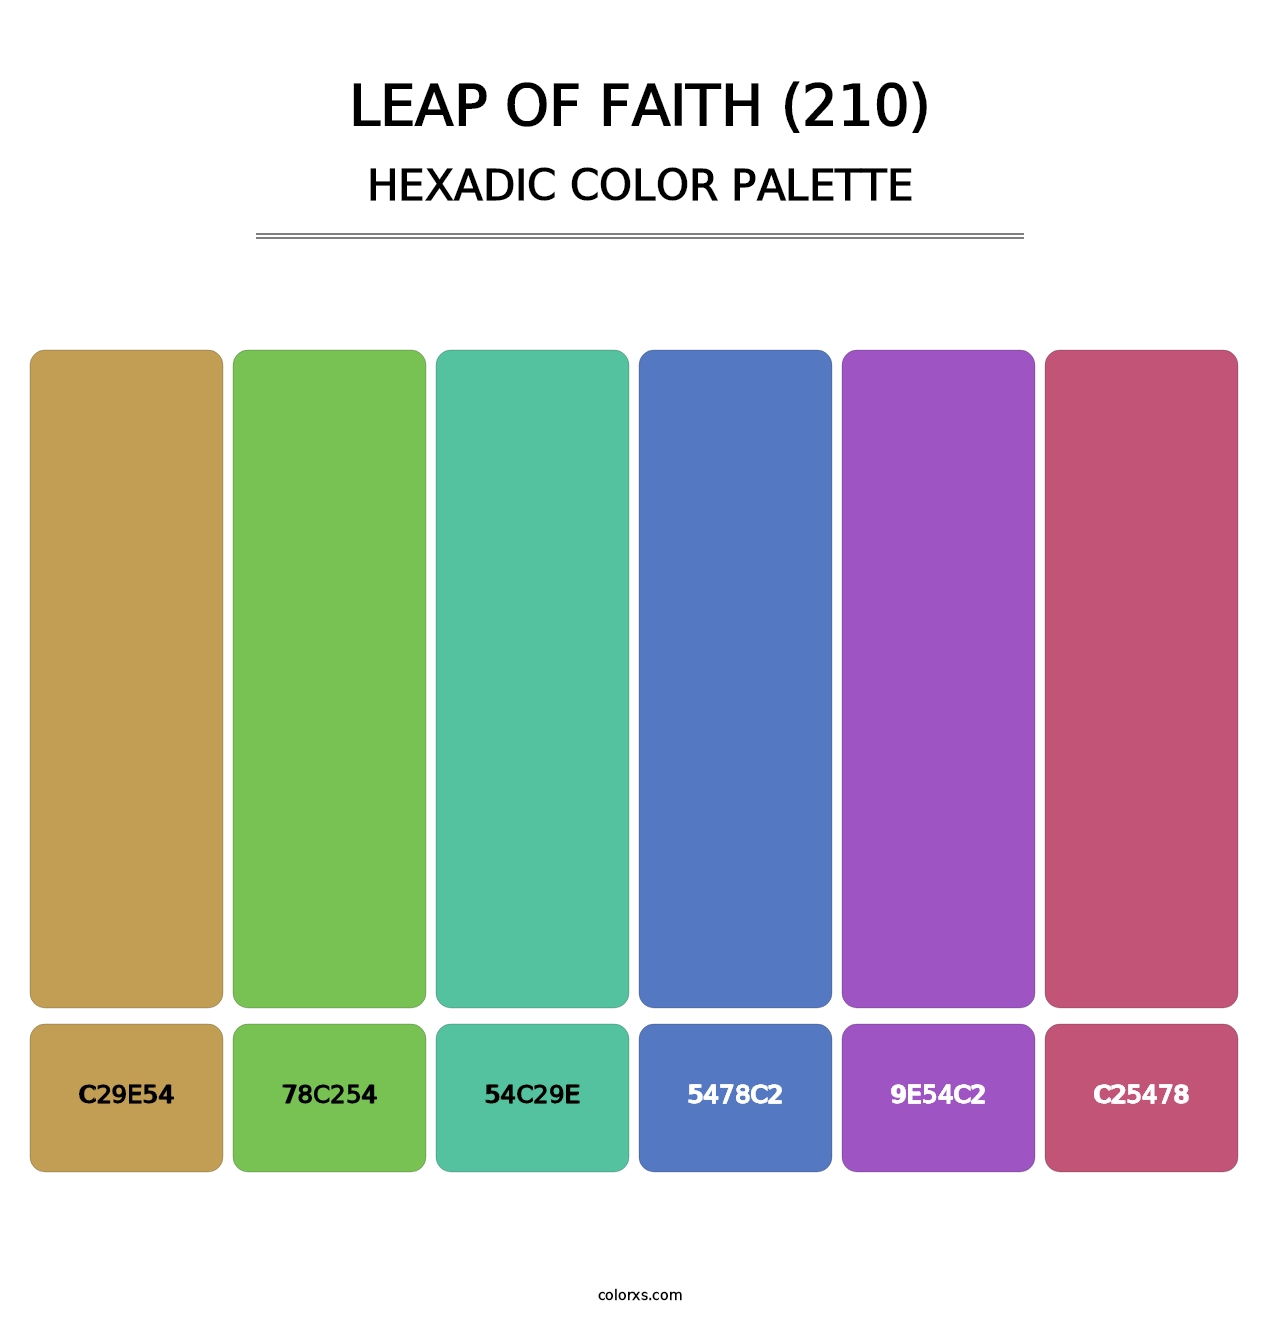 Leap of Faith (210) - Hexadic Color Palette